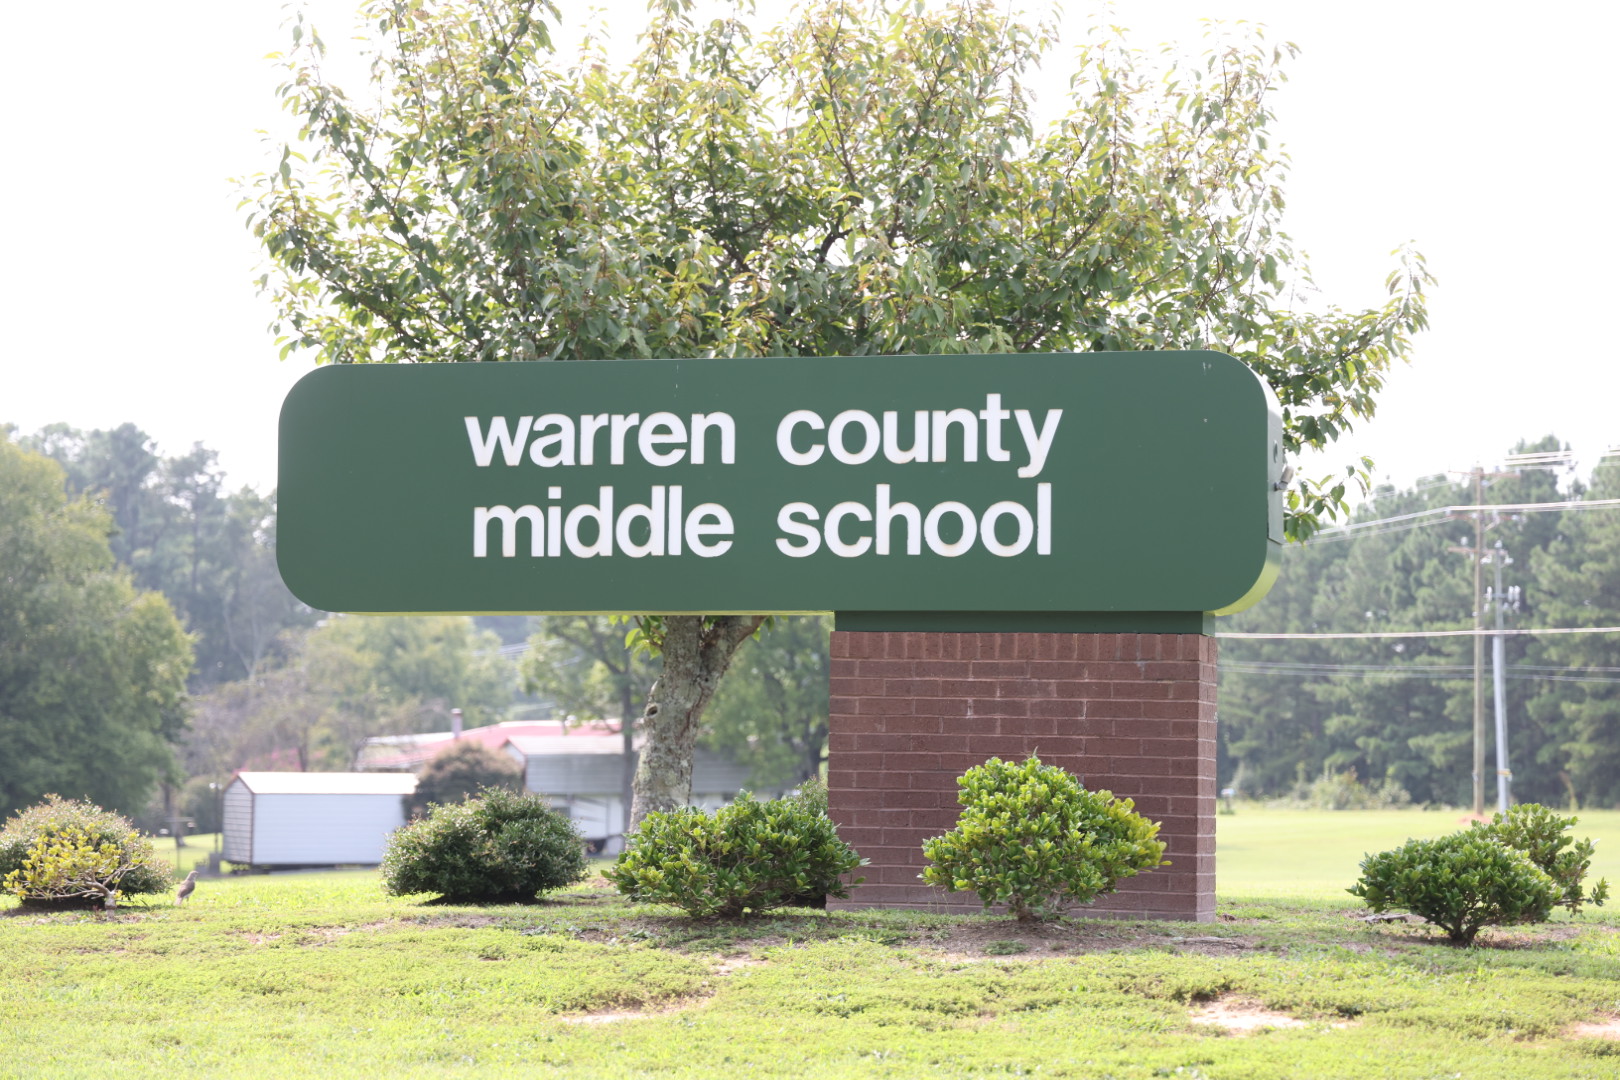 warren county middle school nc sign